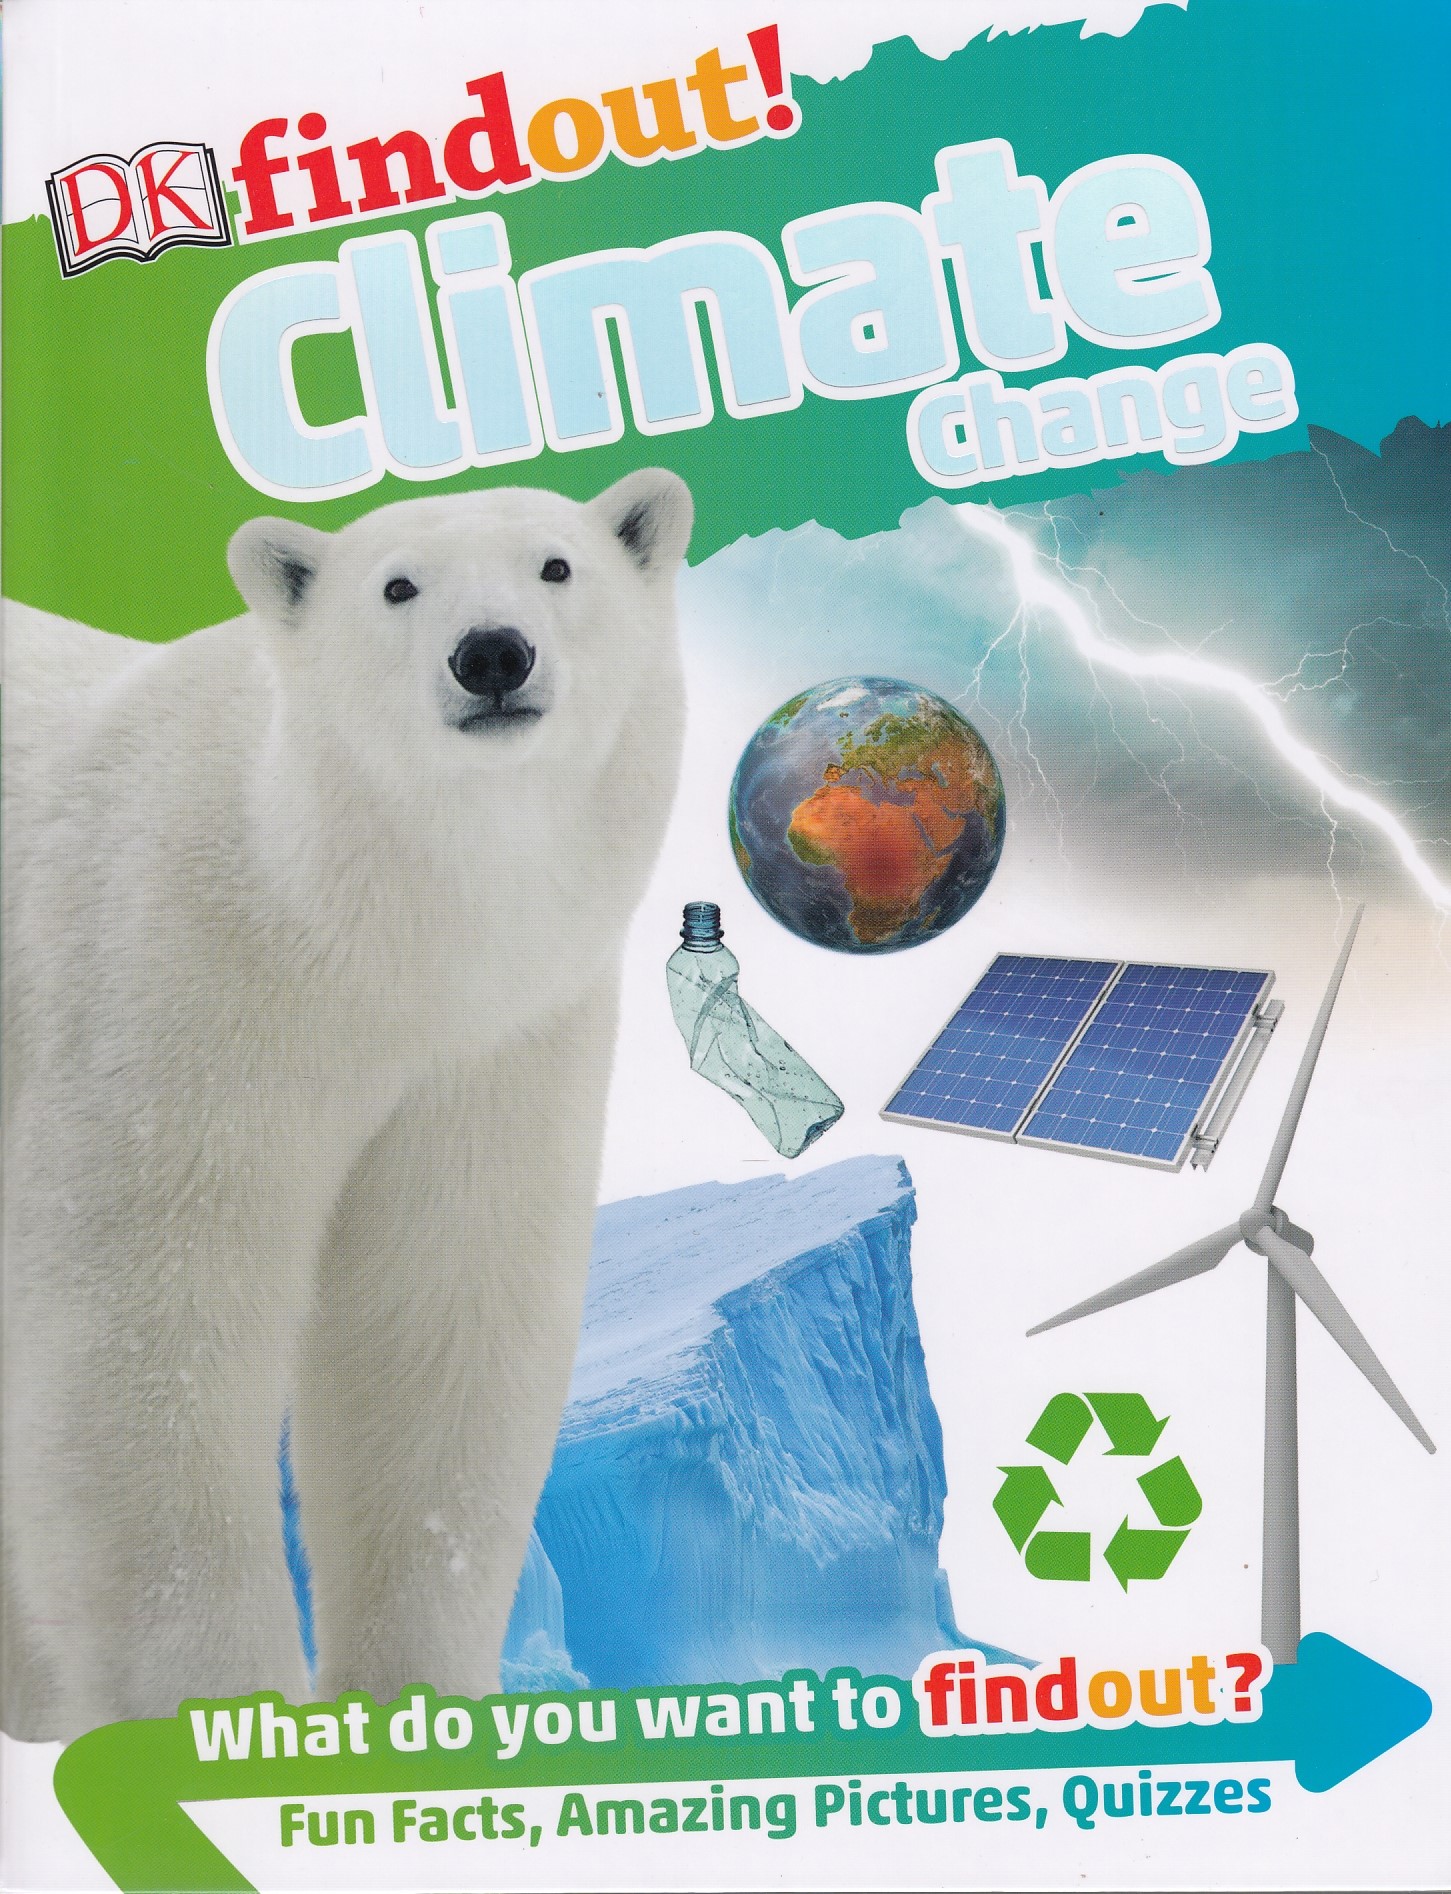 DK FINDOUT! :CLIMATE CHANGE